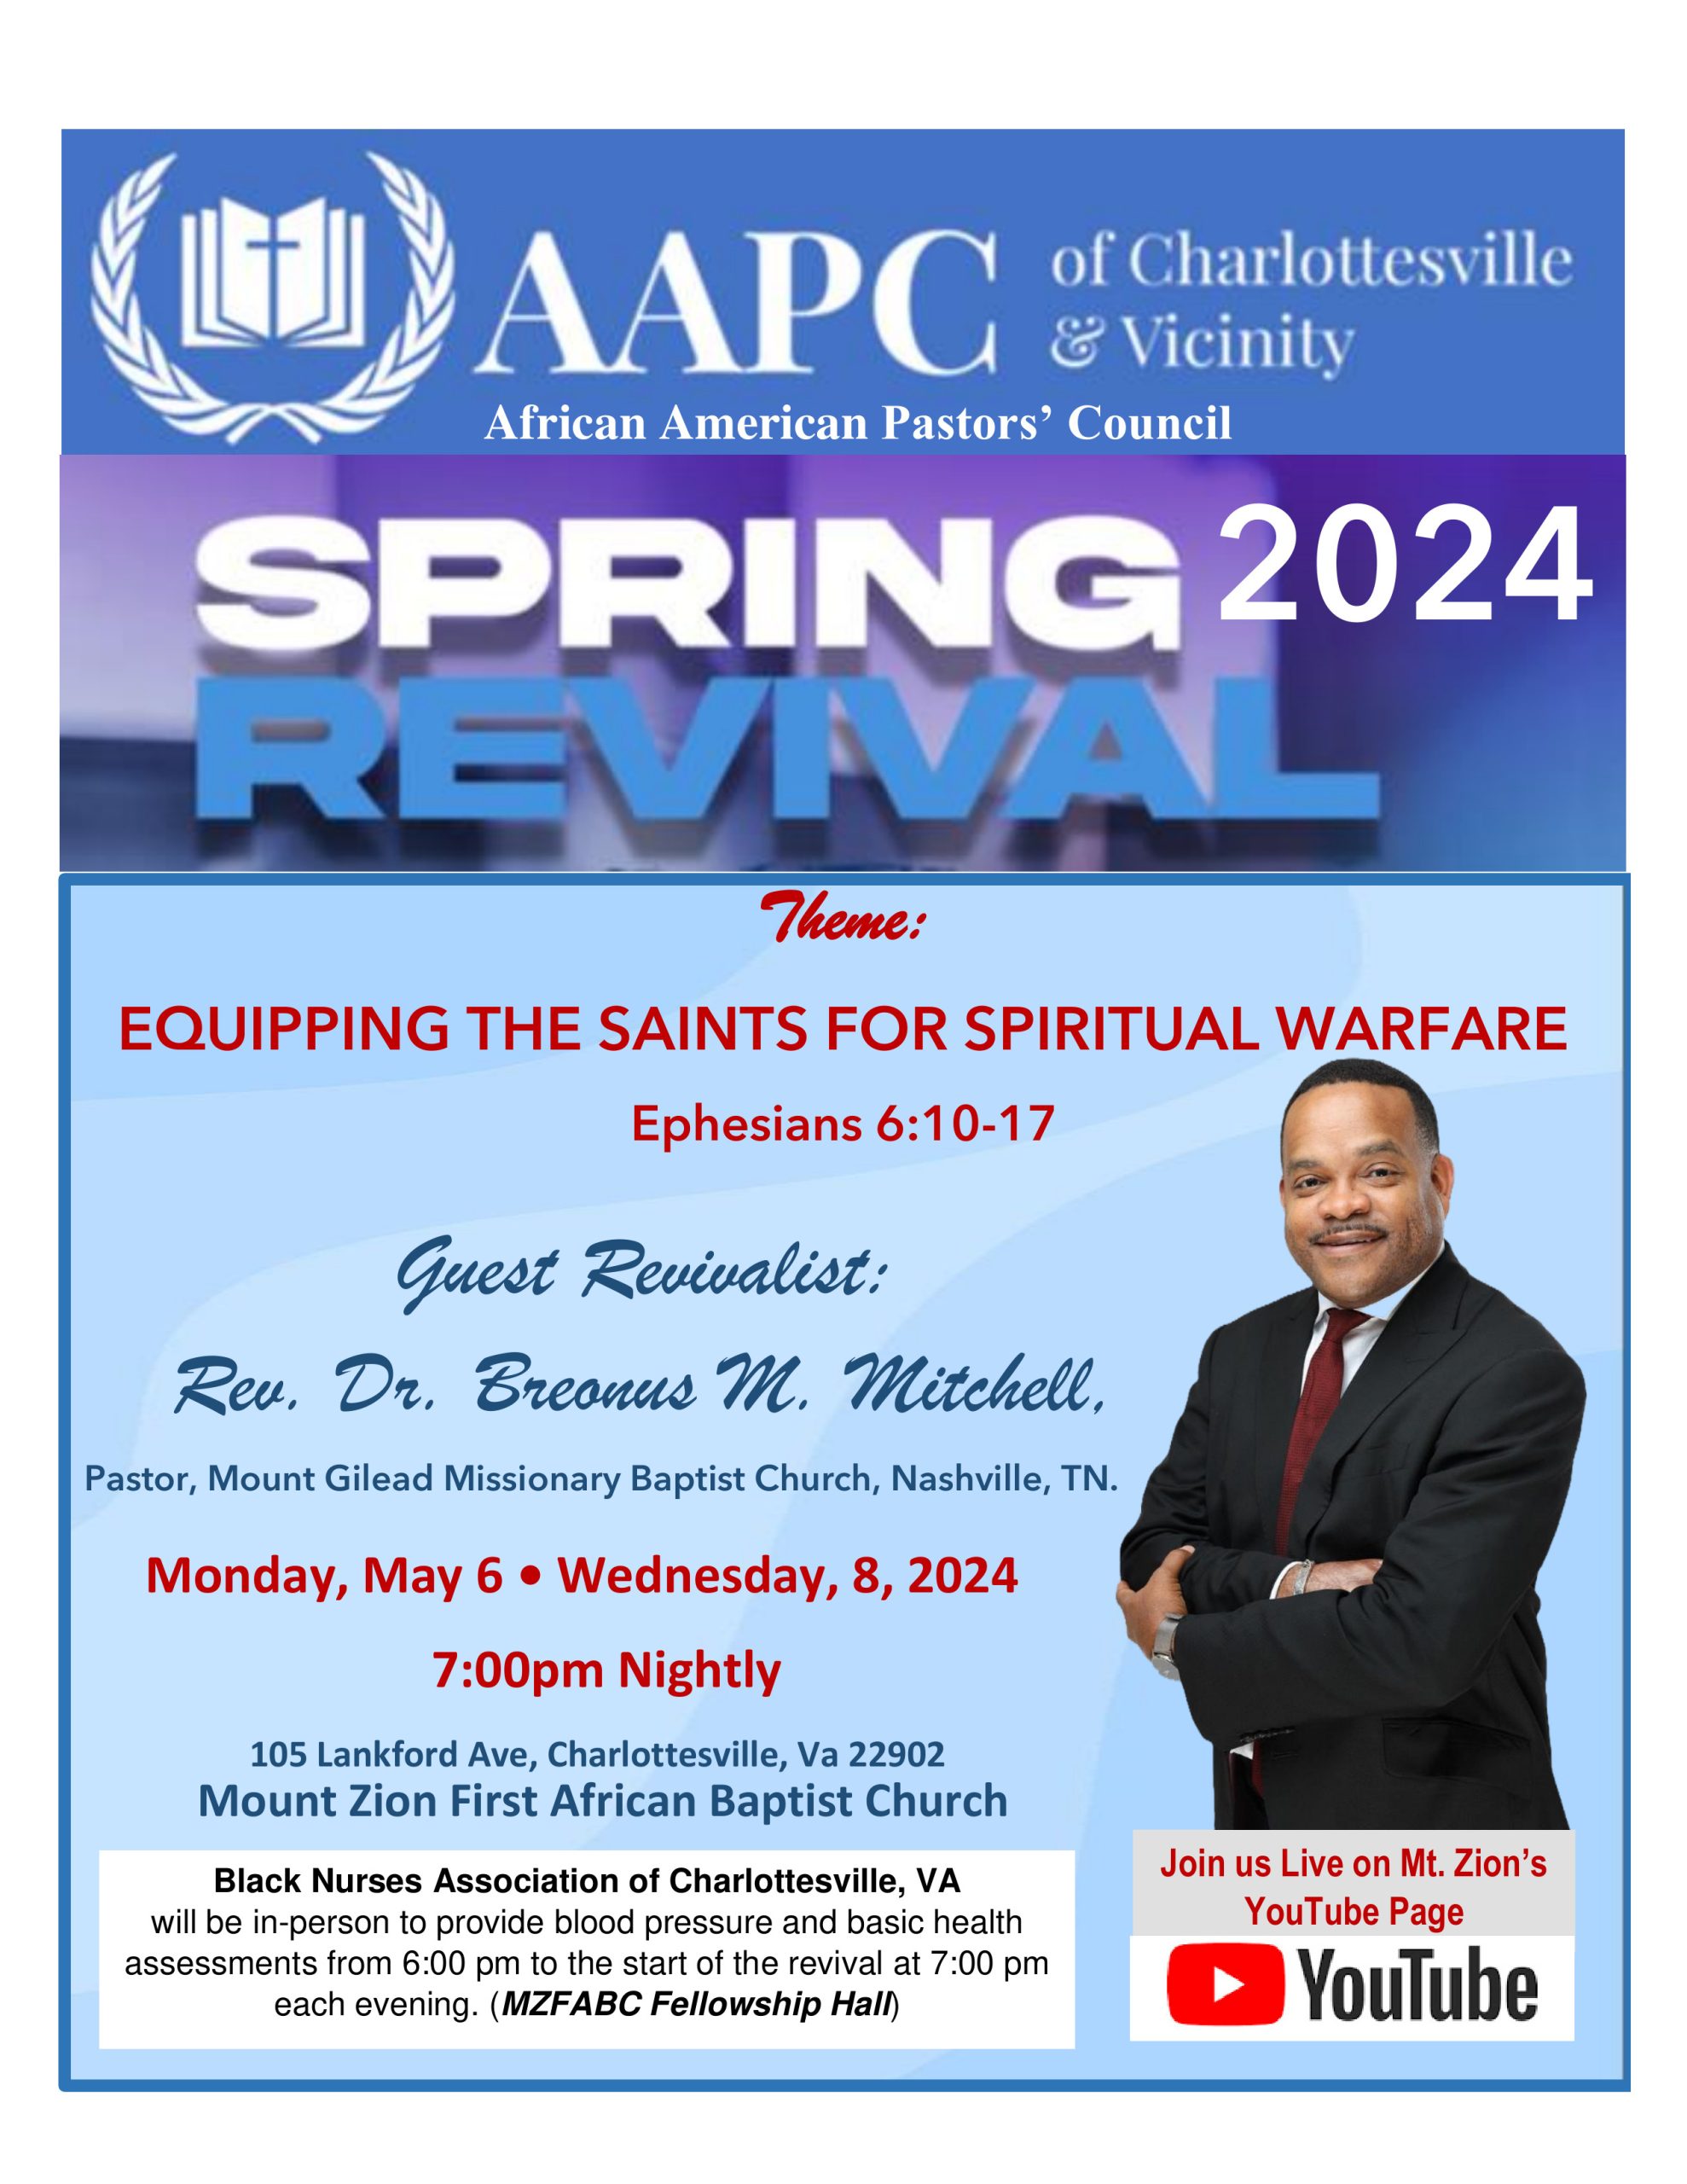 AAPC Revival 2024 Flyer